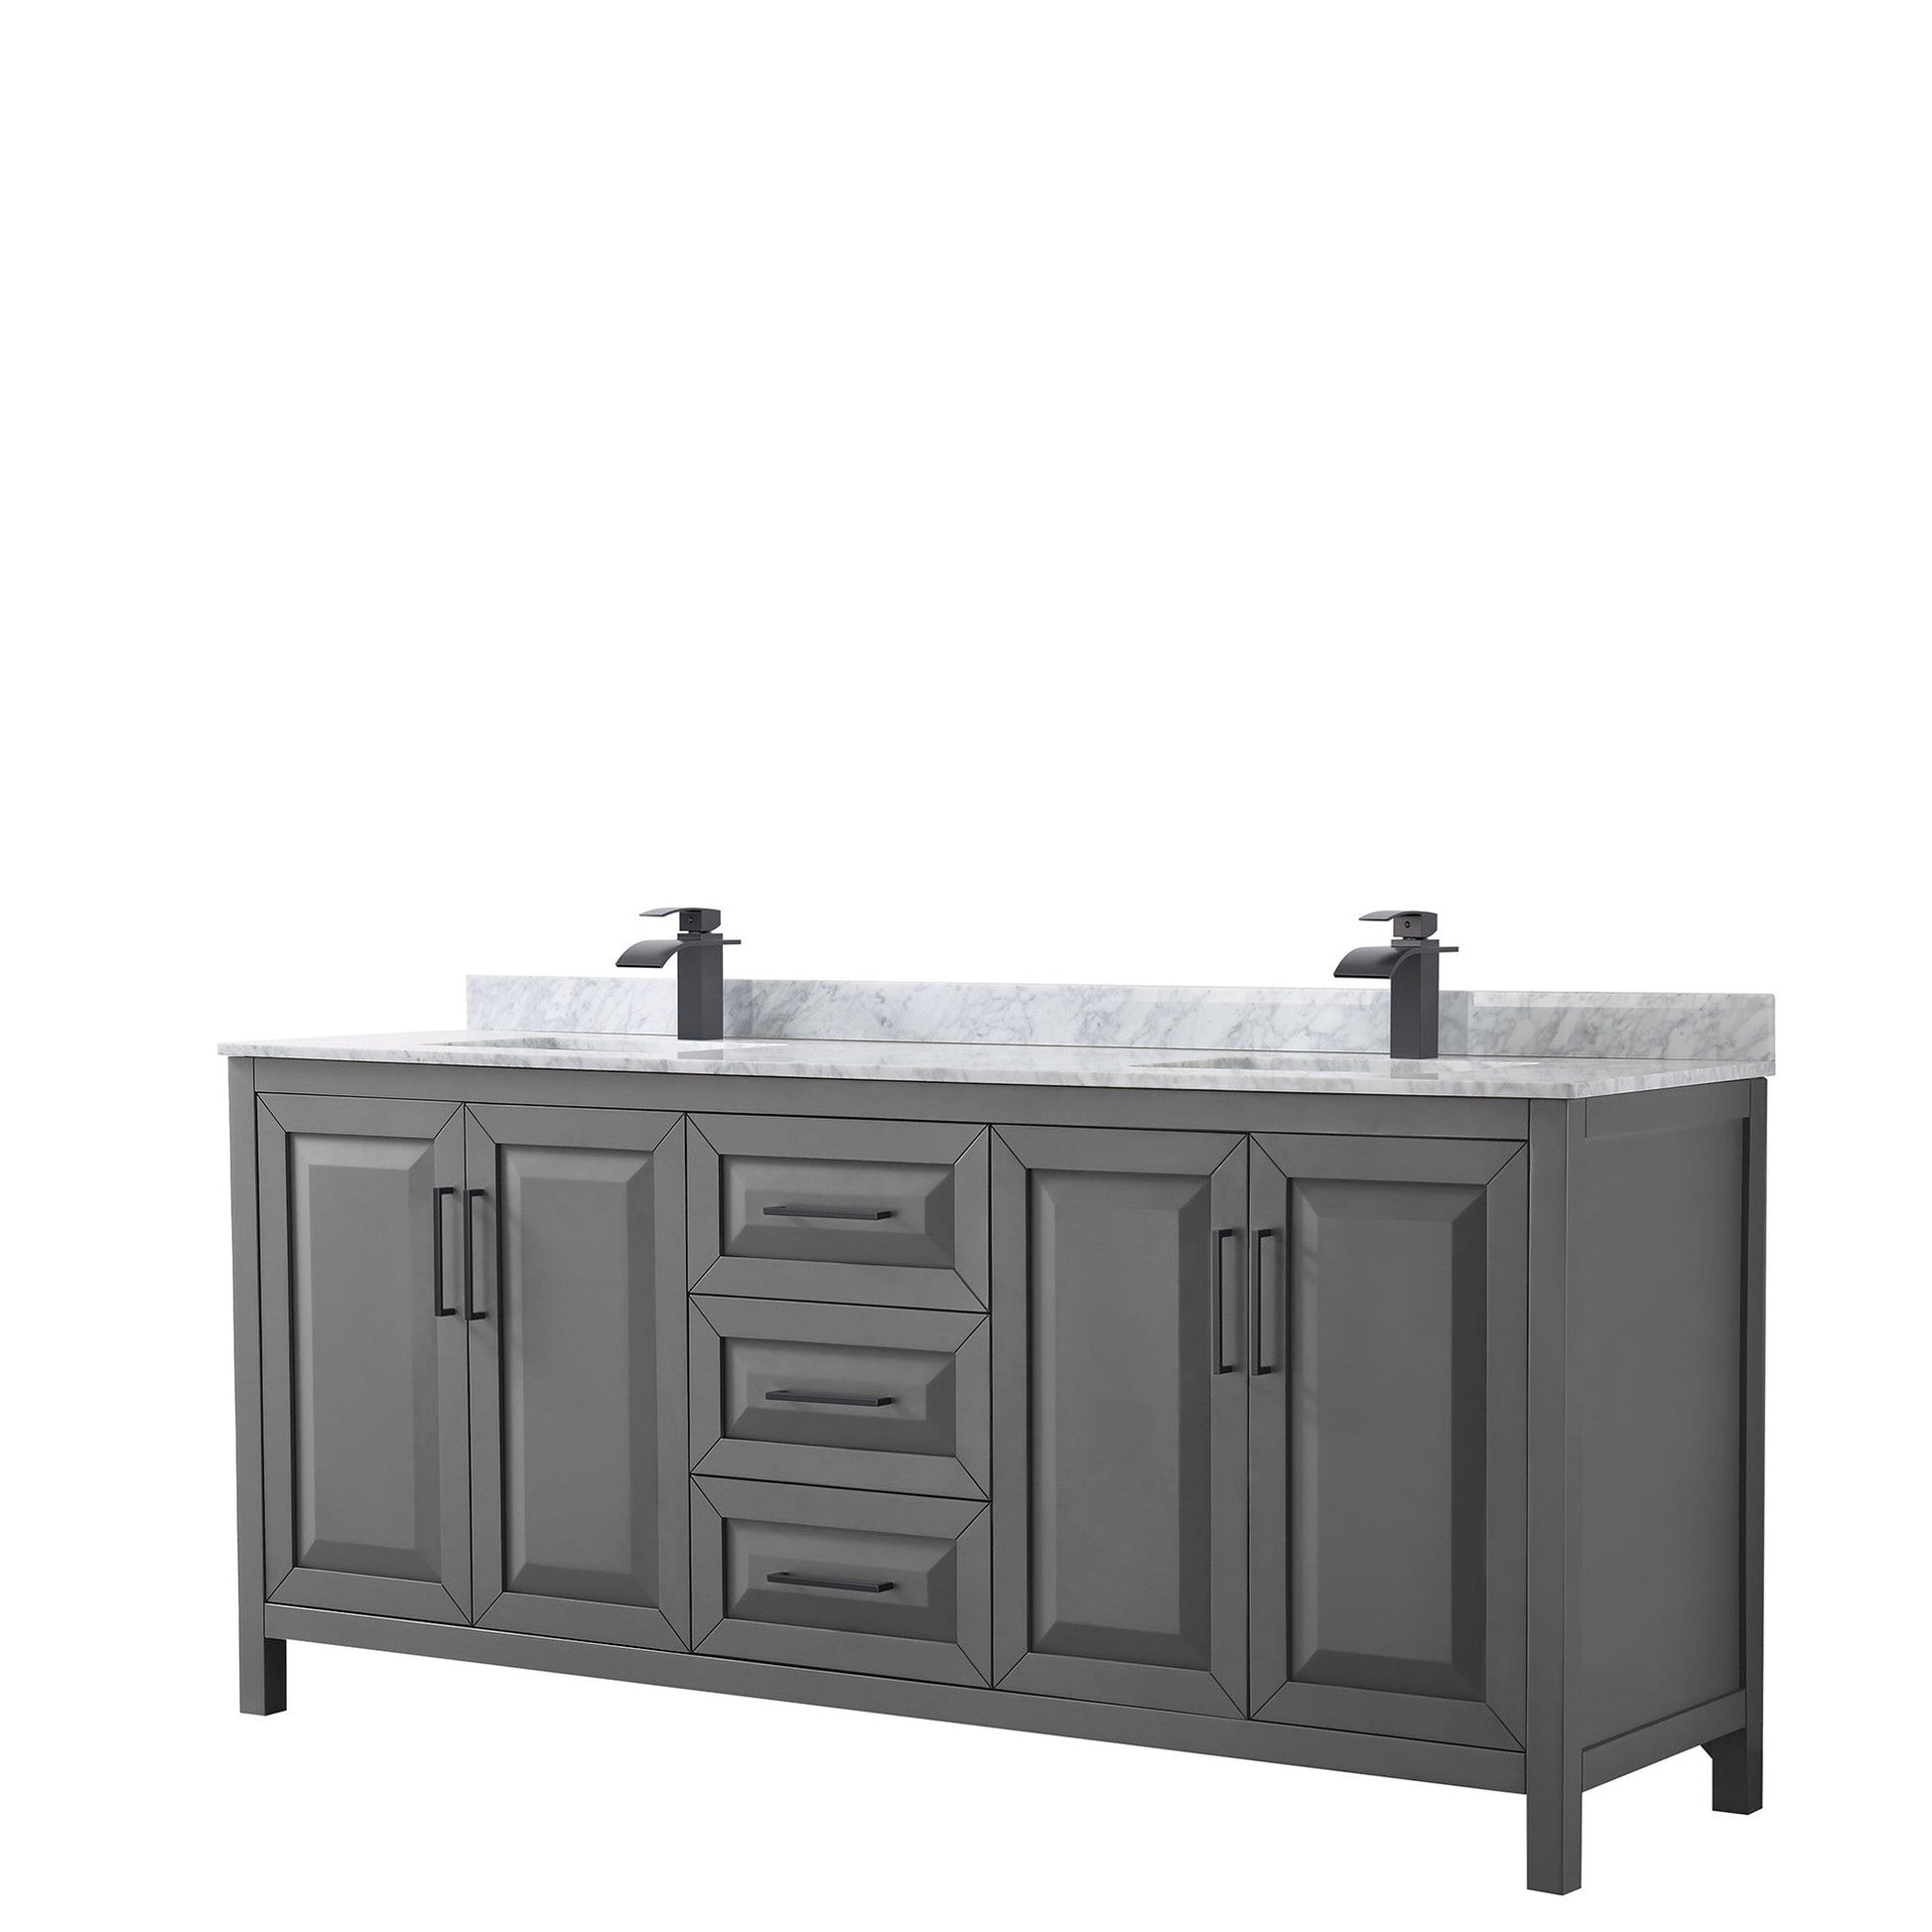 Daria 80" Double Bathroom Vanity in Dark Gray, White Carrara Marble Countertop, Undermount Square Sinks, Matte Black Trim